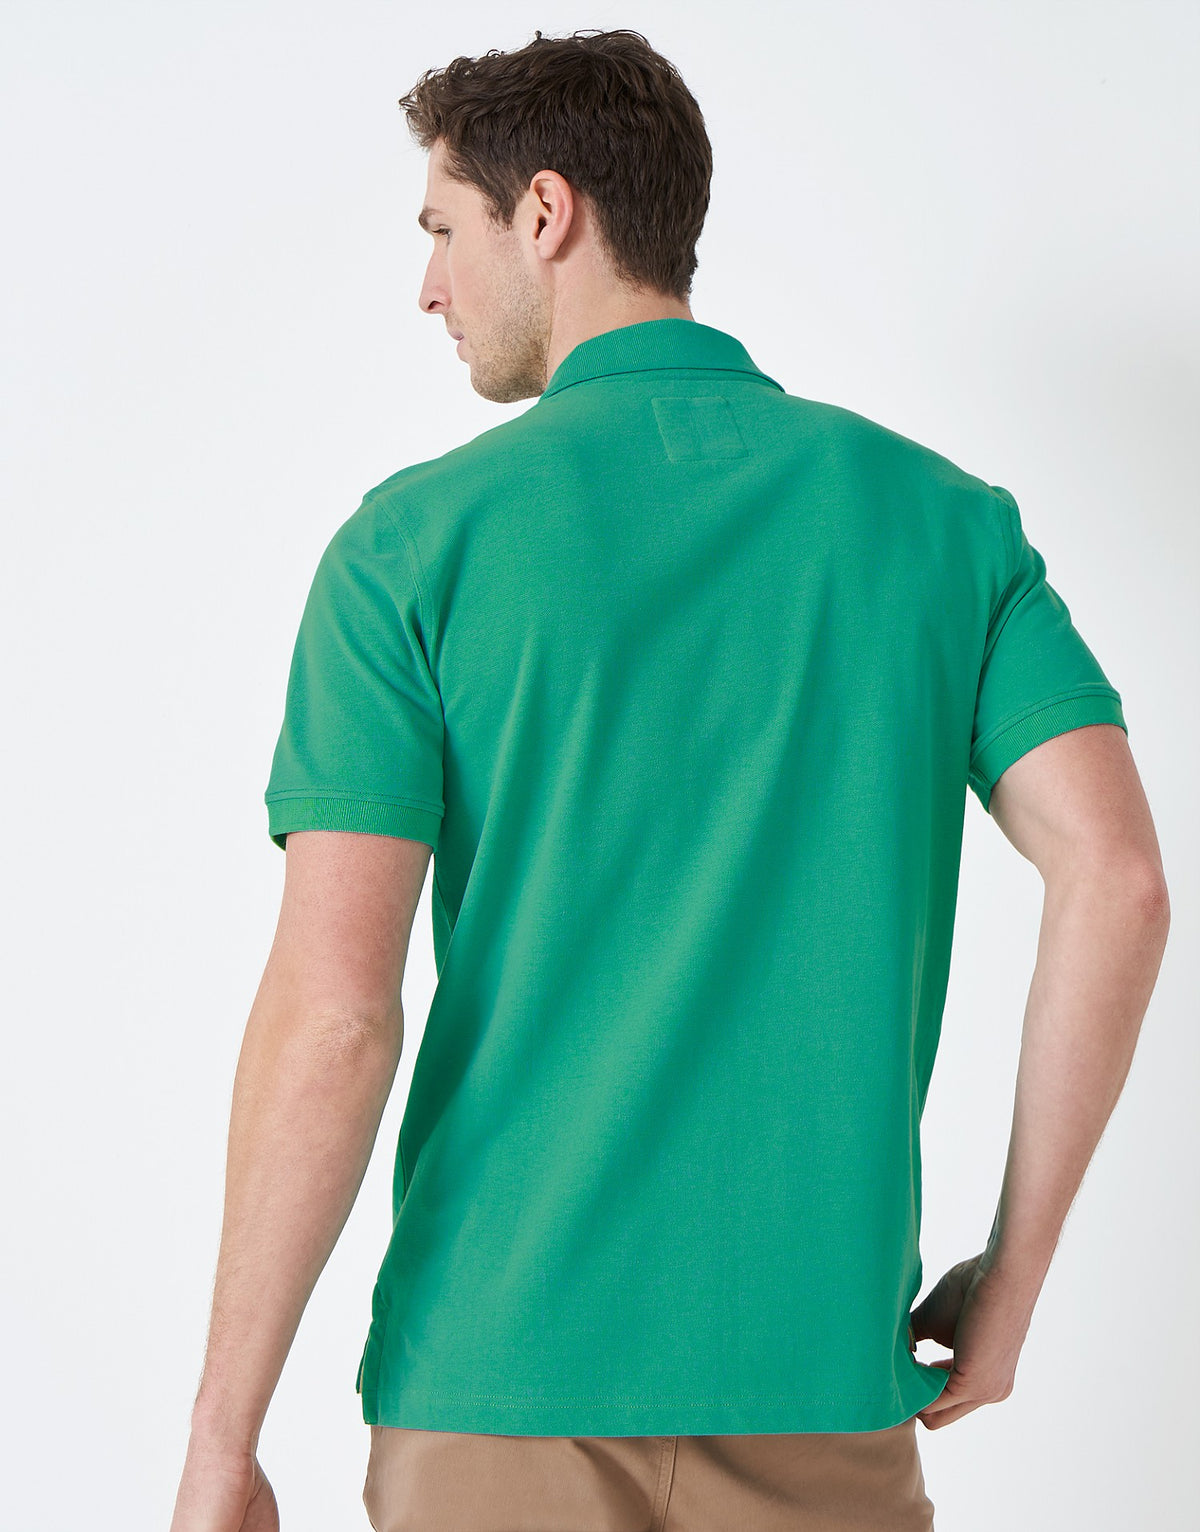 Crew Clothing Mens Pique Polo Shirt 'Classic Pique Polo' - Short Sleeved, 04, Mke002, Arcadia Green